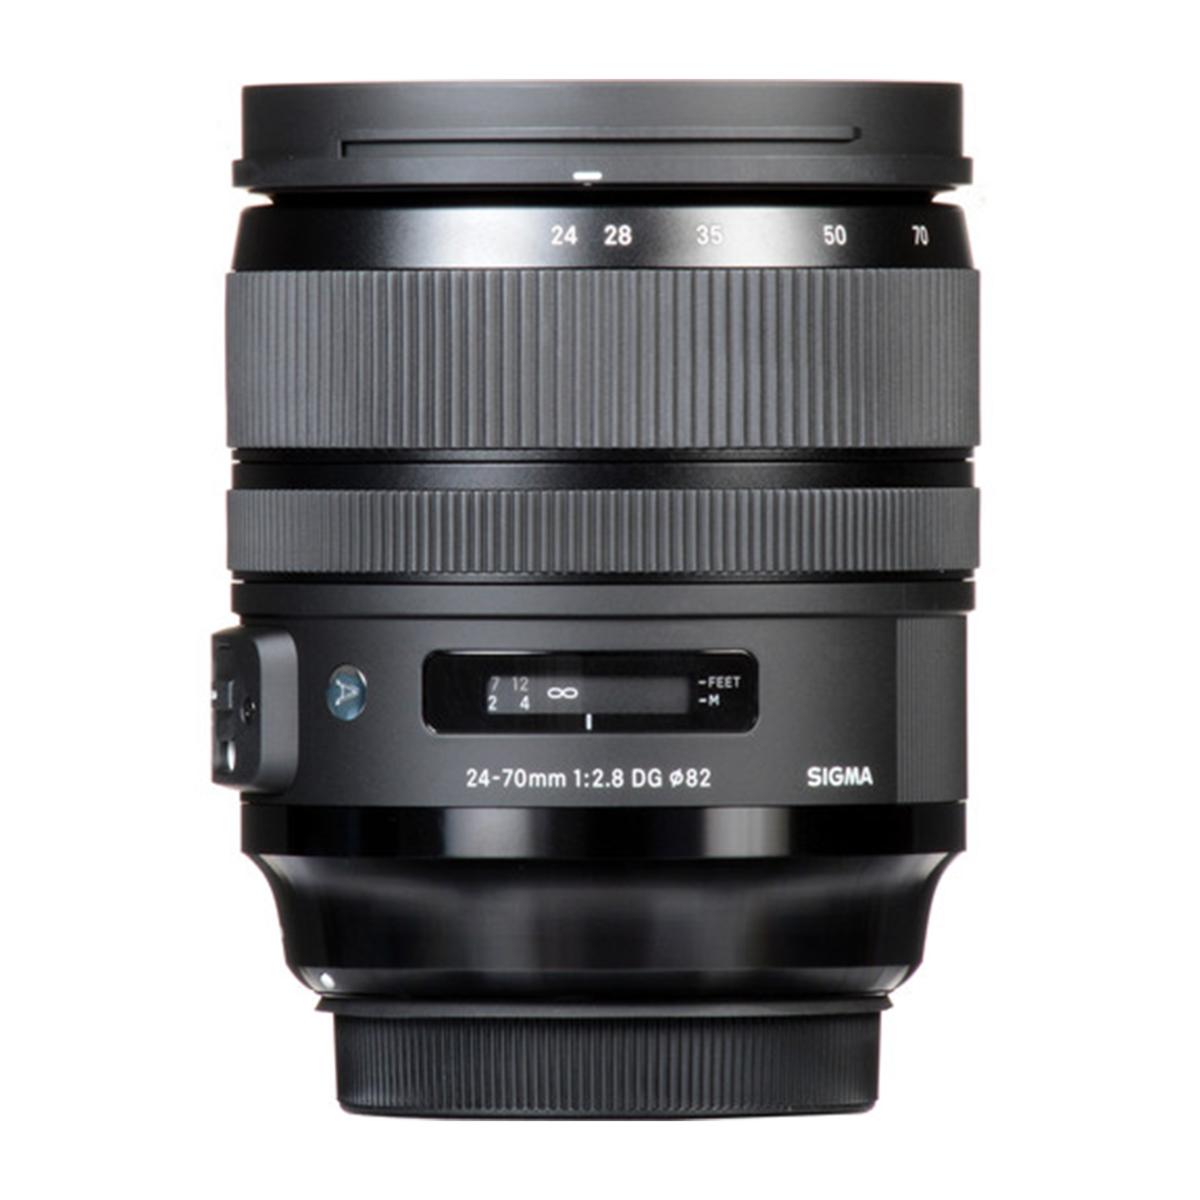 Sigma 24-70mm f2.8 DG OS HSM Art Lens for Canon EF